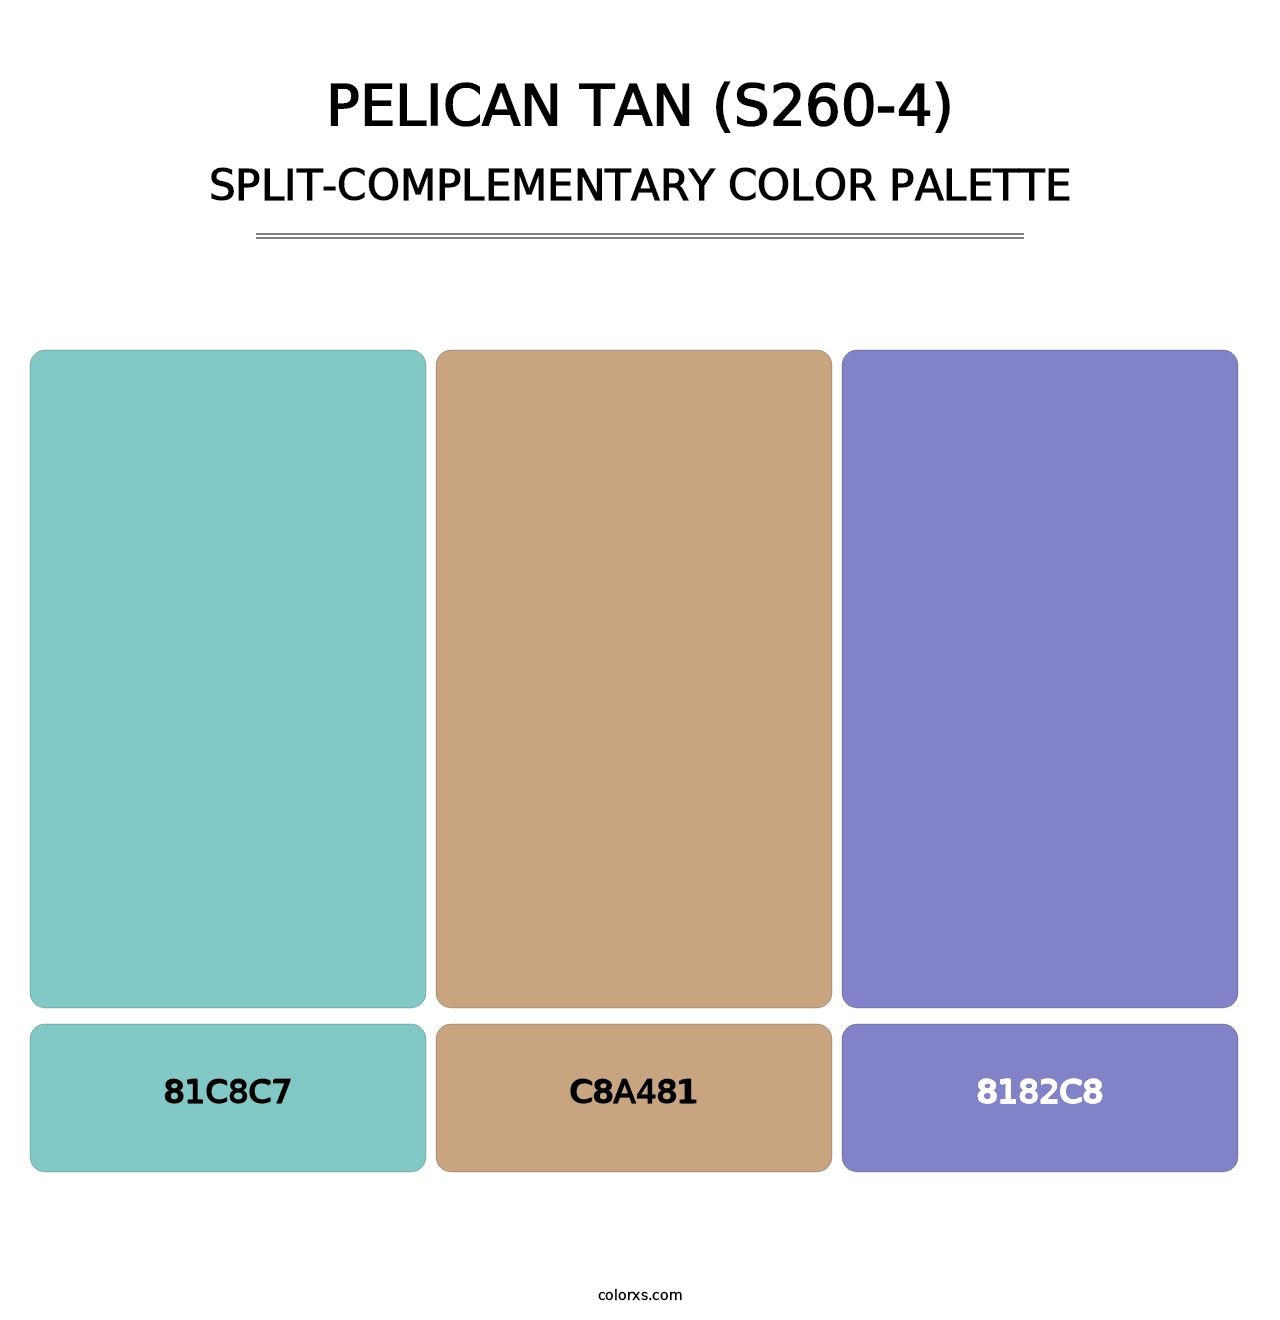 Pelican Tan (S260-4) - Split-Complementary Color Palette